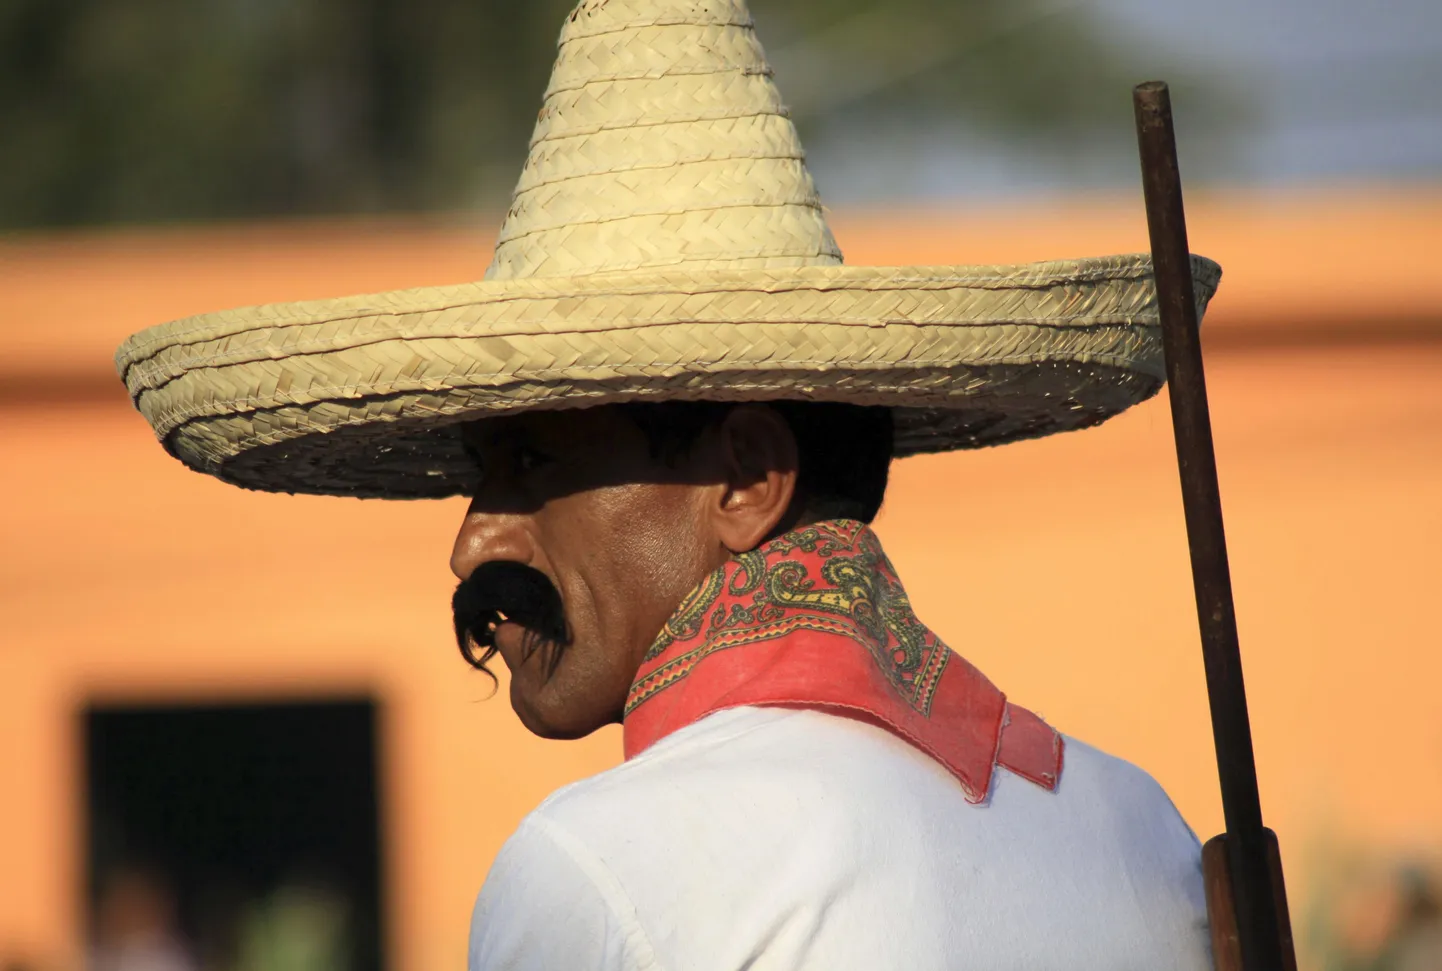 Zapata revolutsionääri riietuses Mehhiko mees.